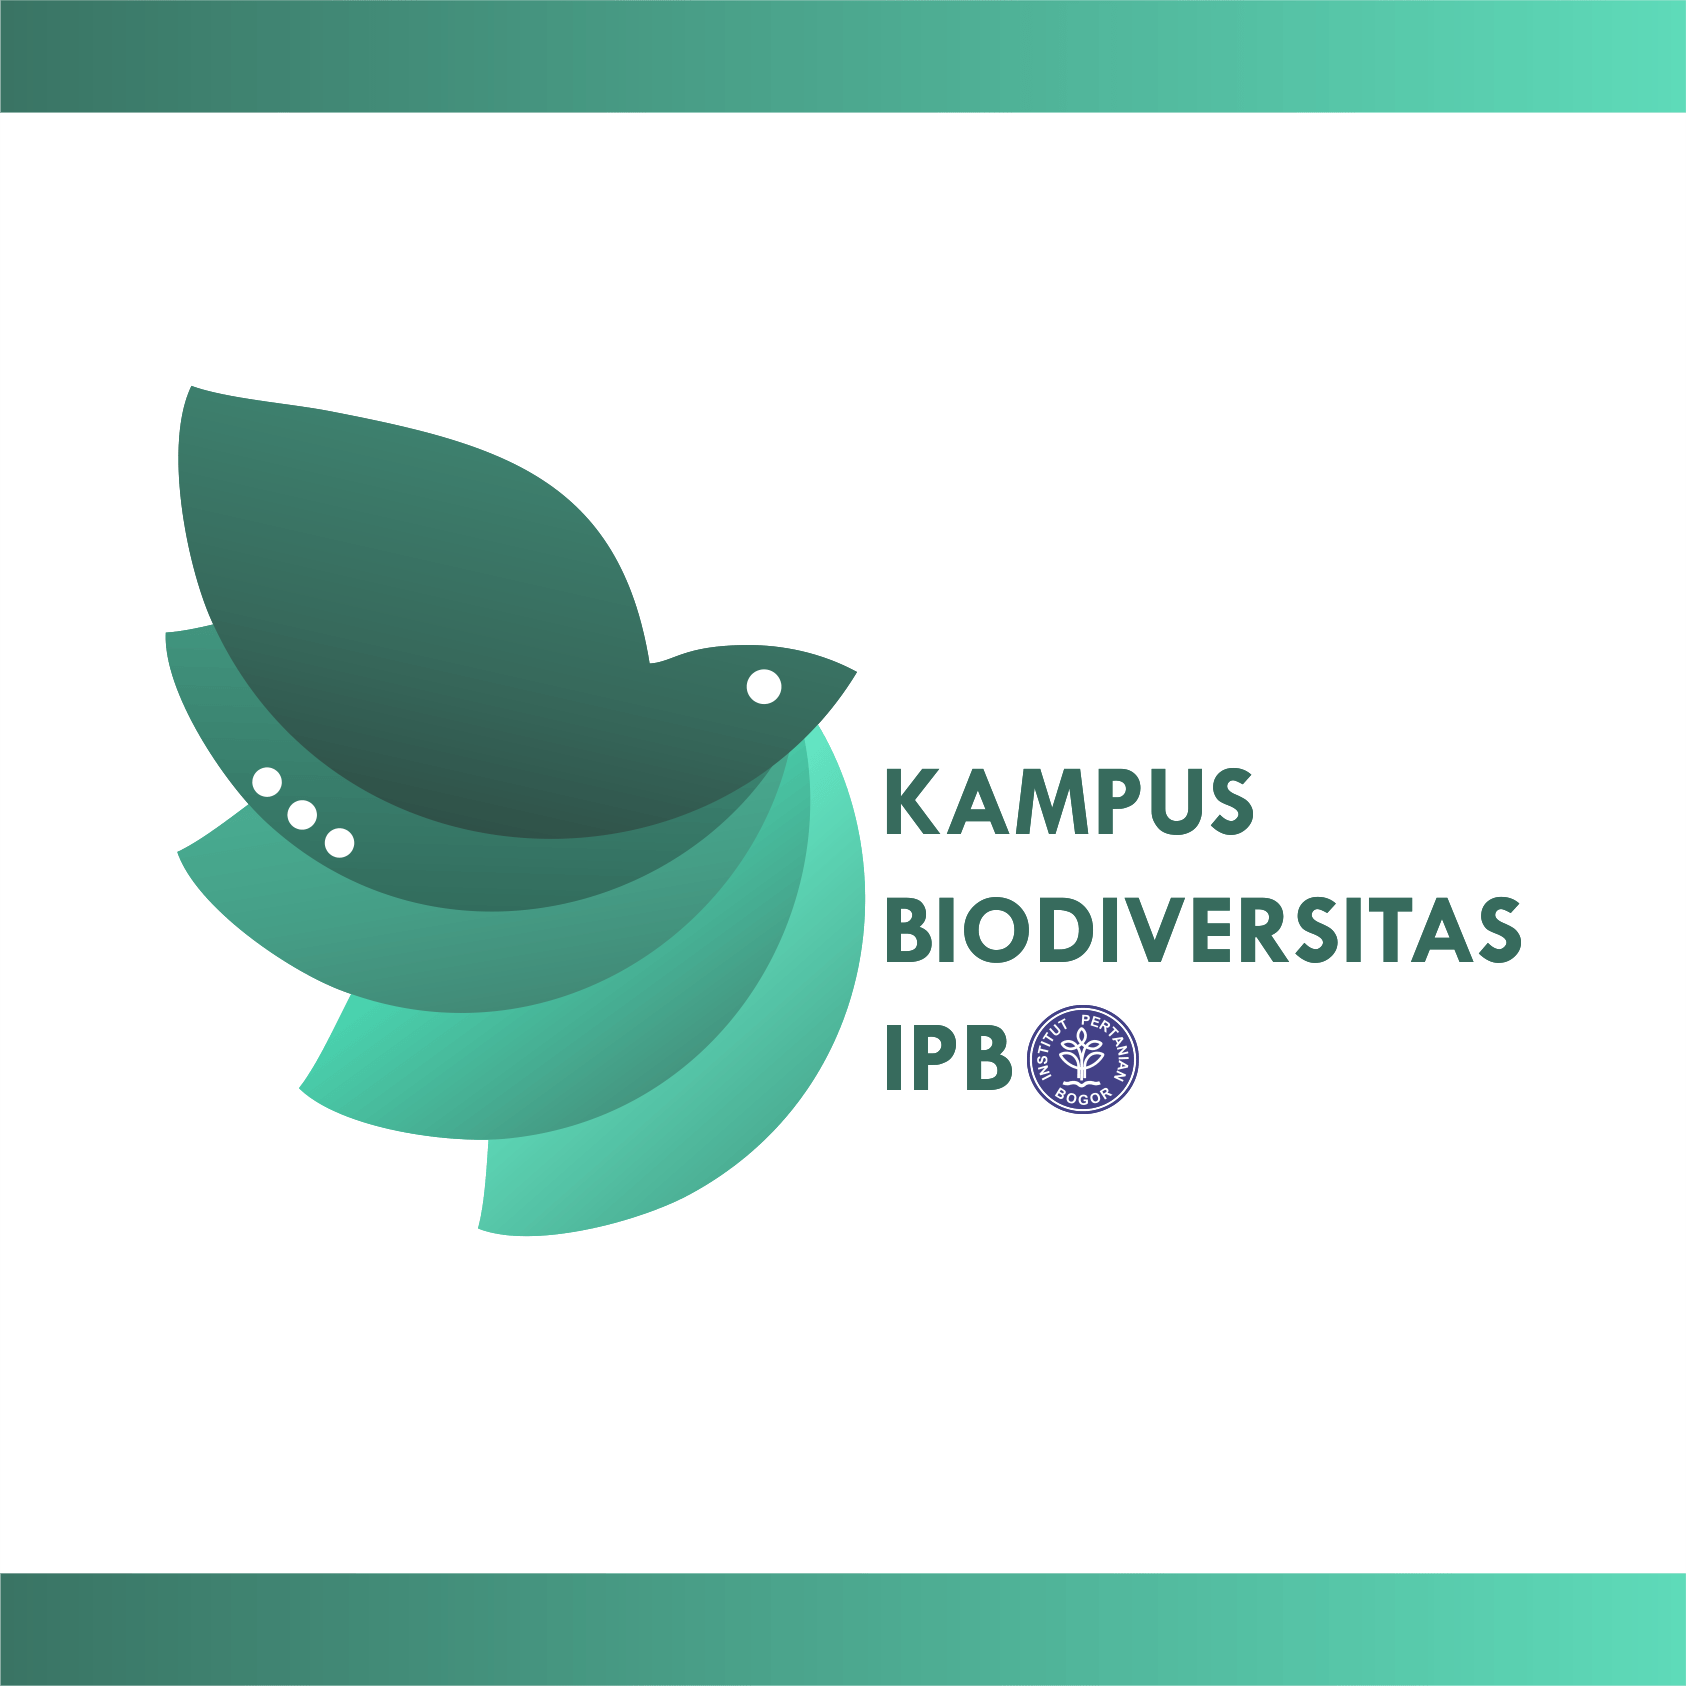 Calon Logo - calon Logo IPB kampus biodiversitas | Design | Pinterest | Design ...